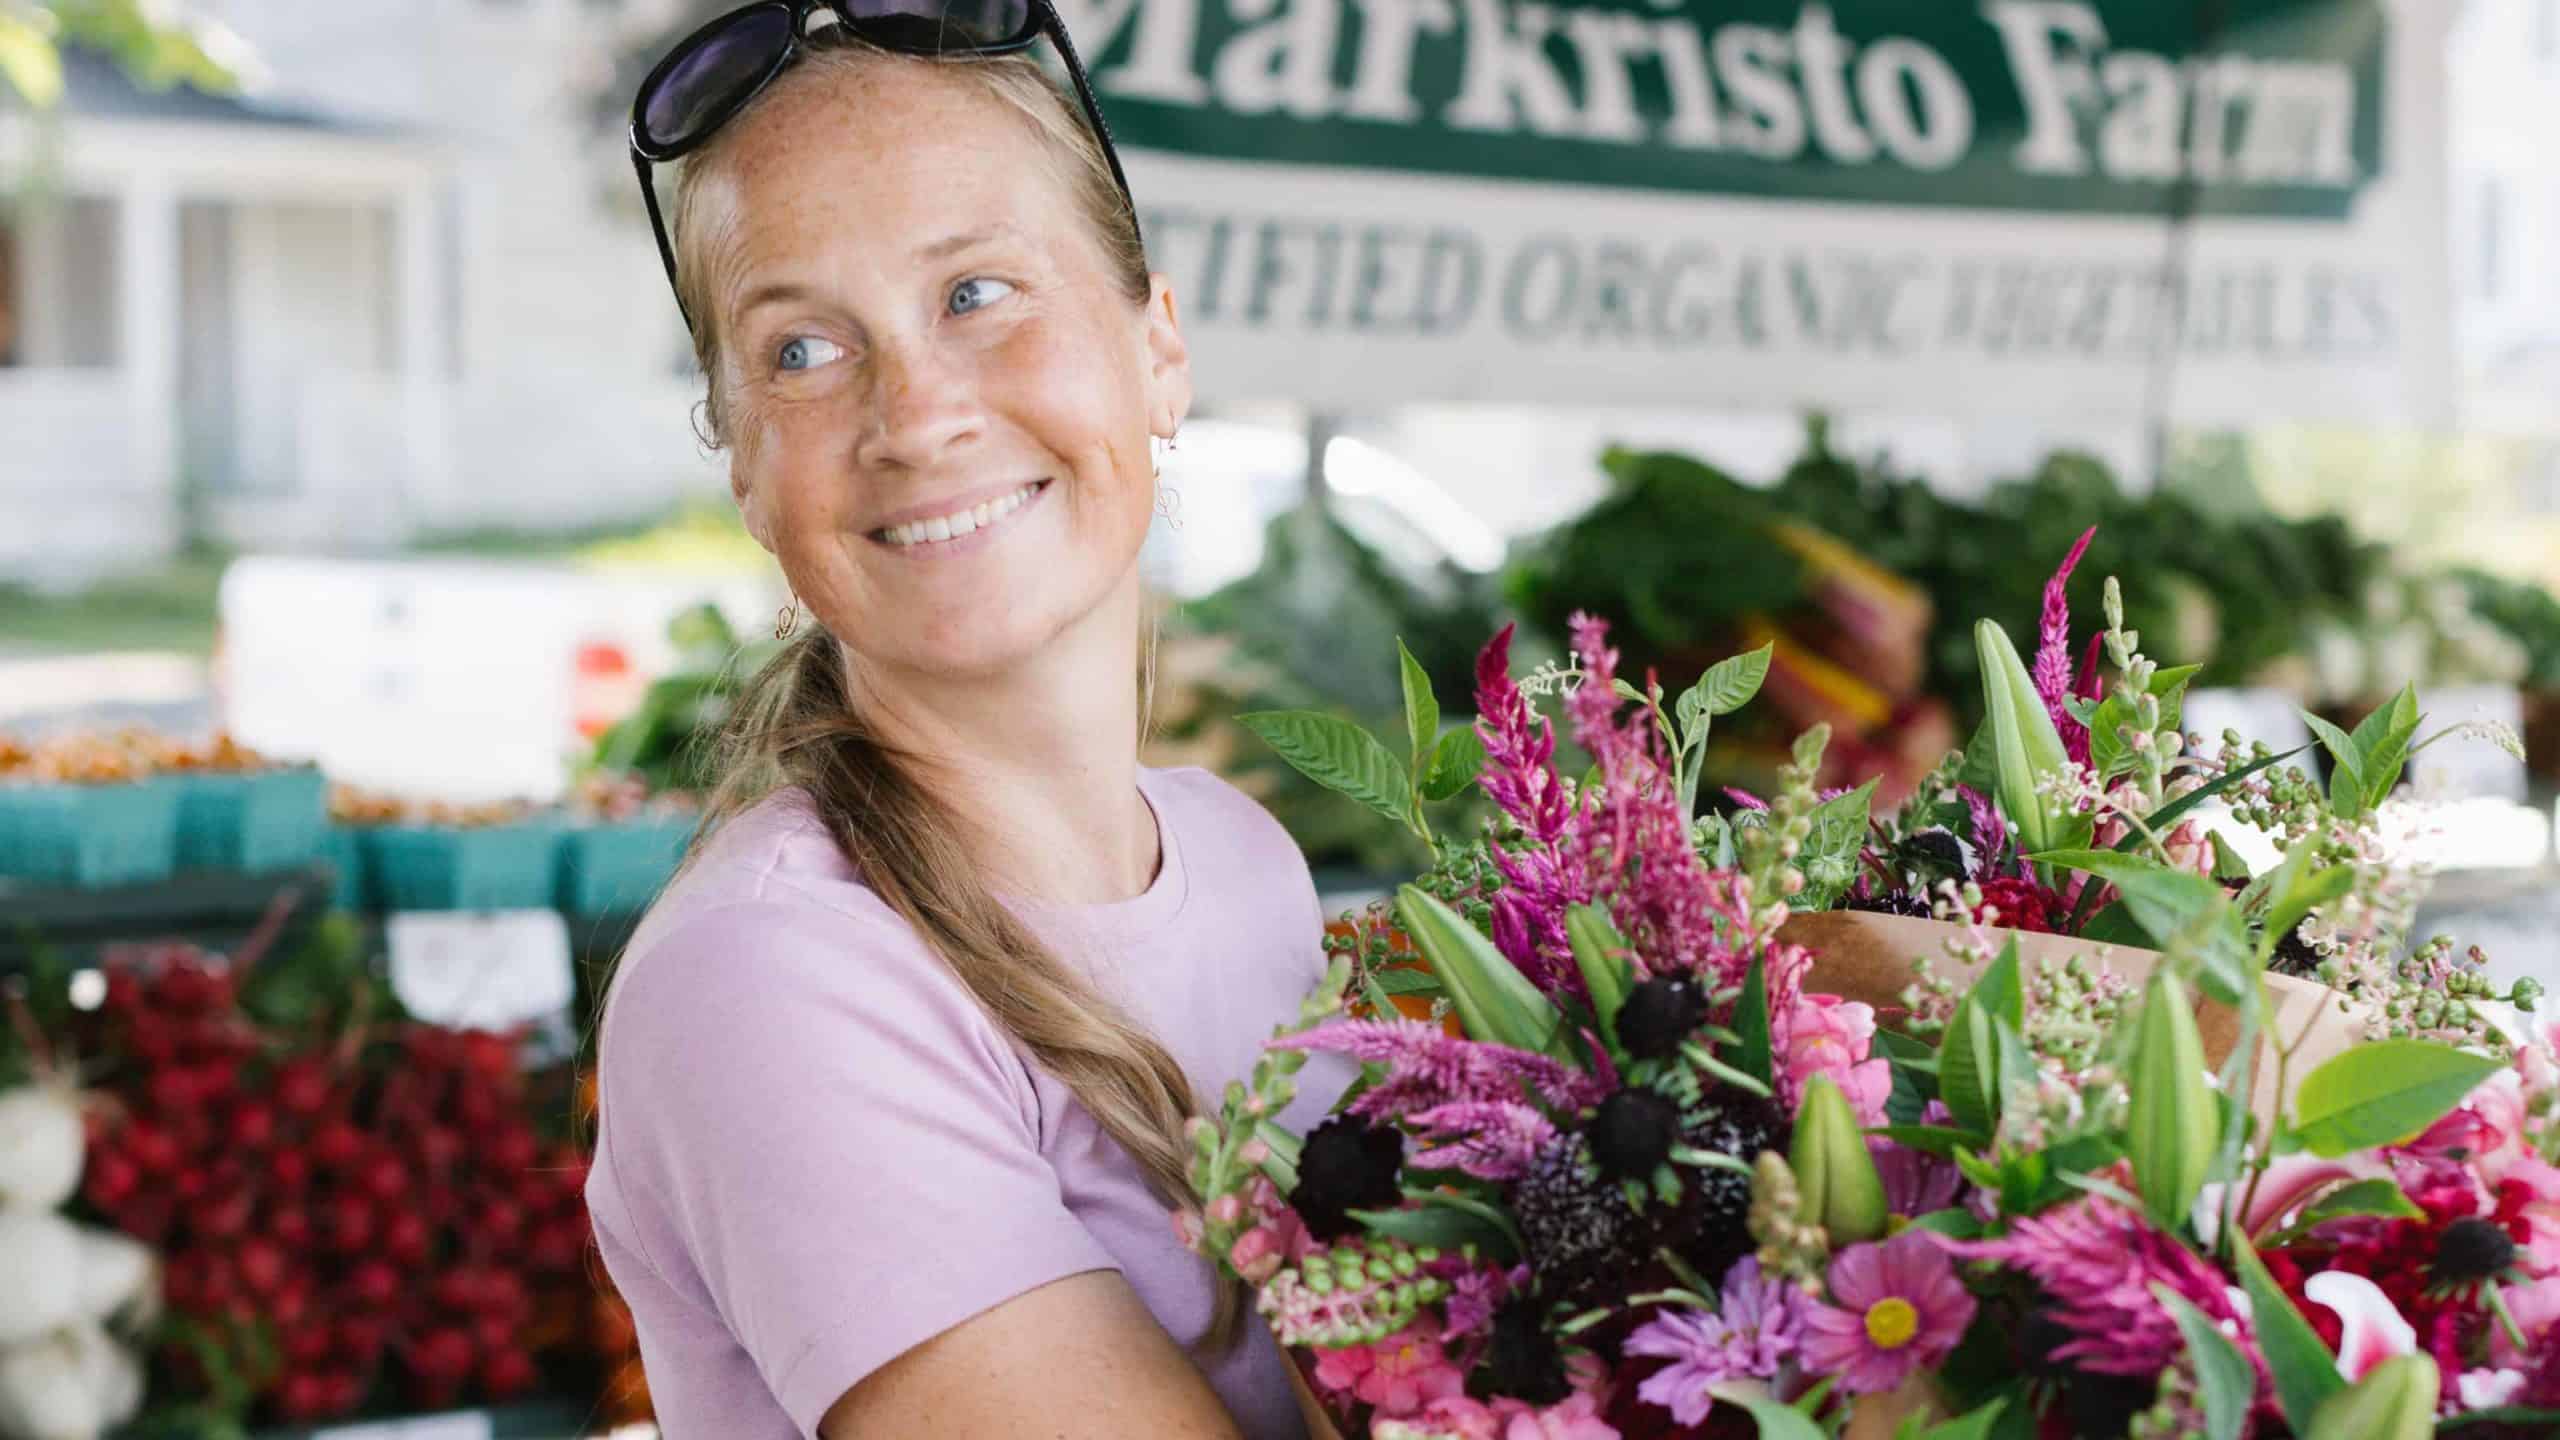 Marcristo Farm brings cut flowers to the Great Barrington Farmers Market.